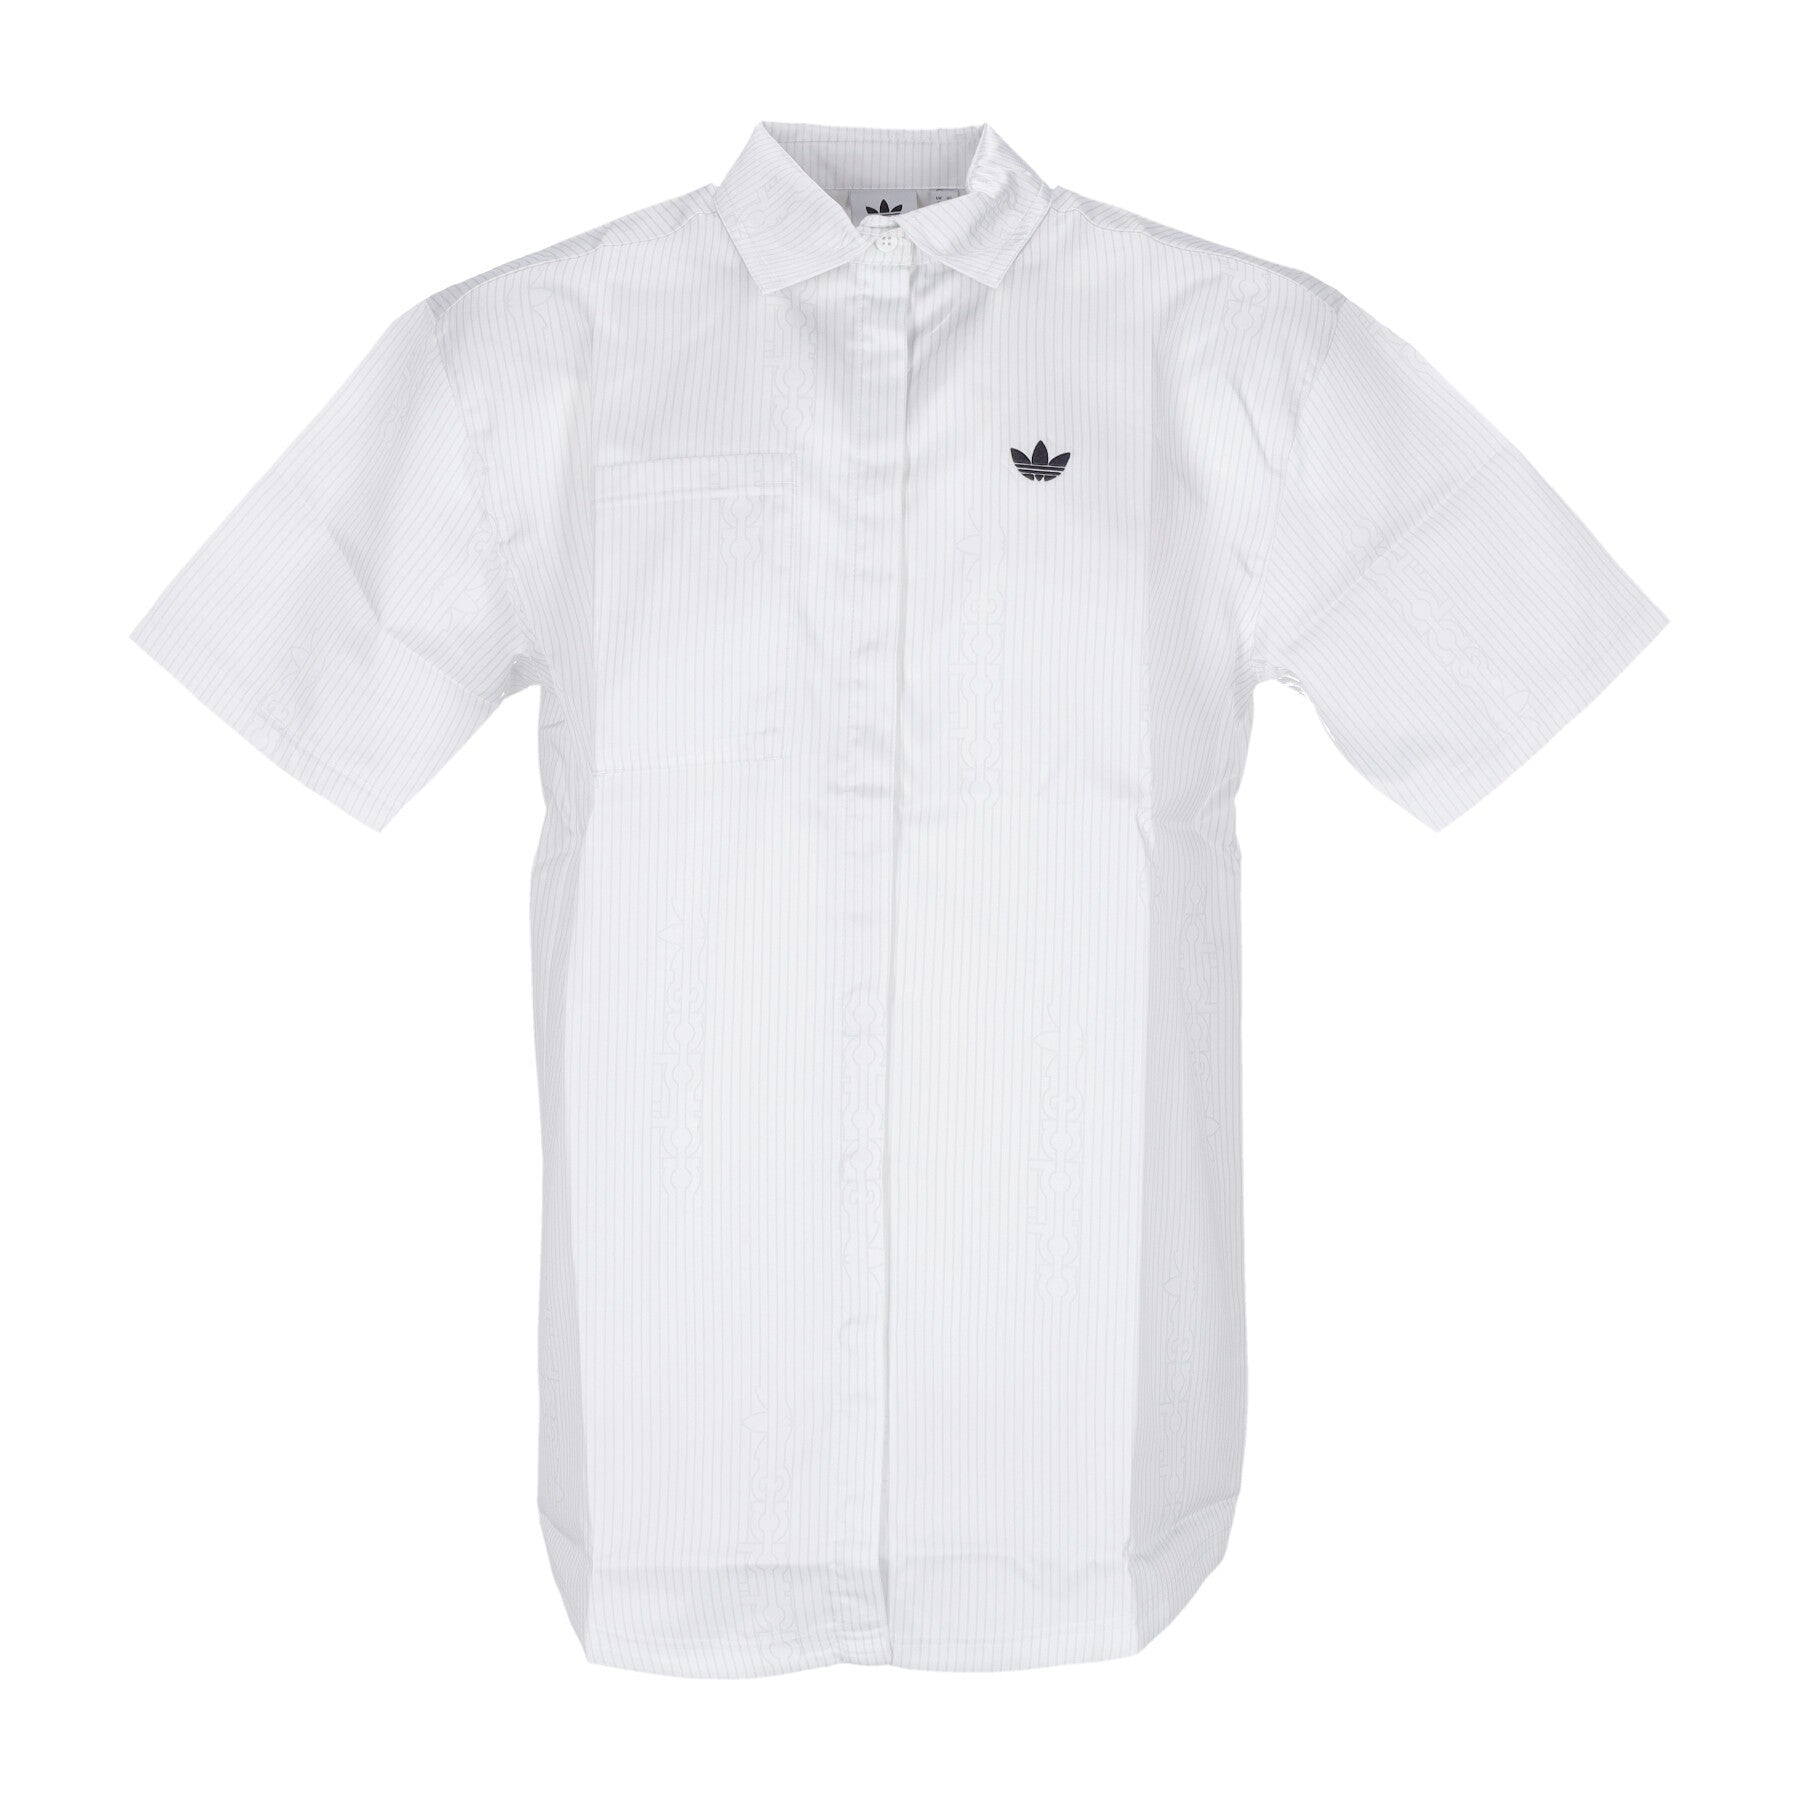 Adidas, Camicia Manica Corta Donna Loose Shirt, White/grey One